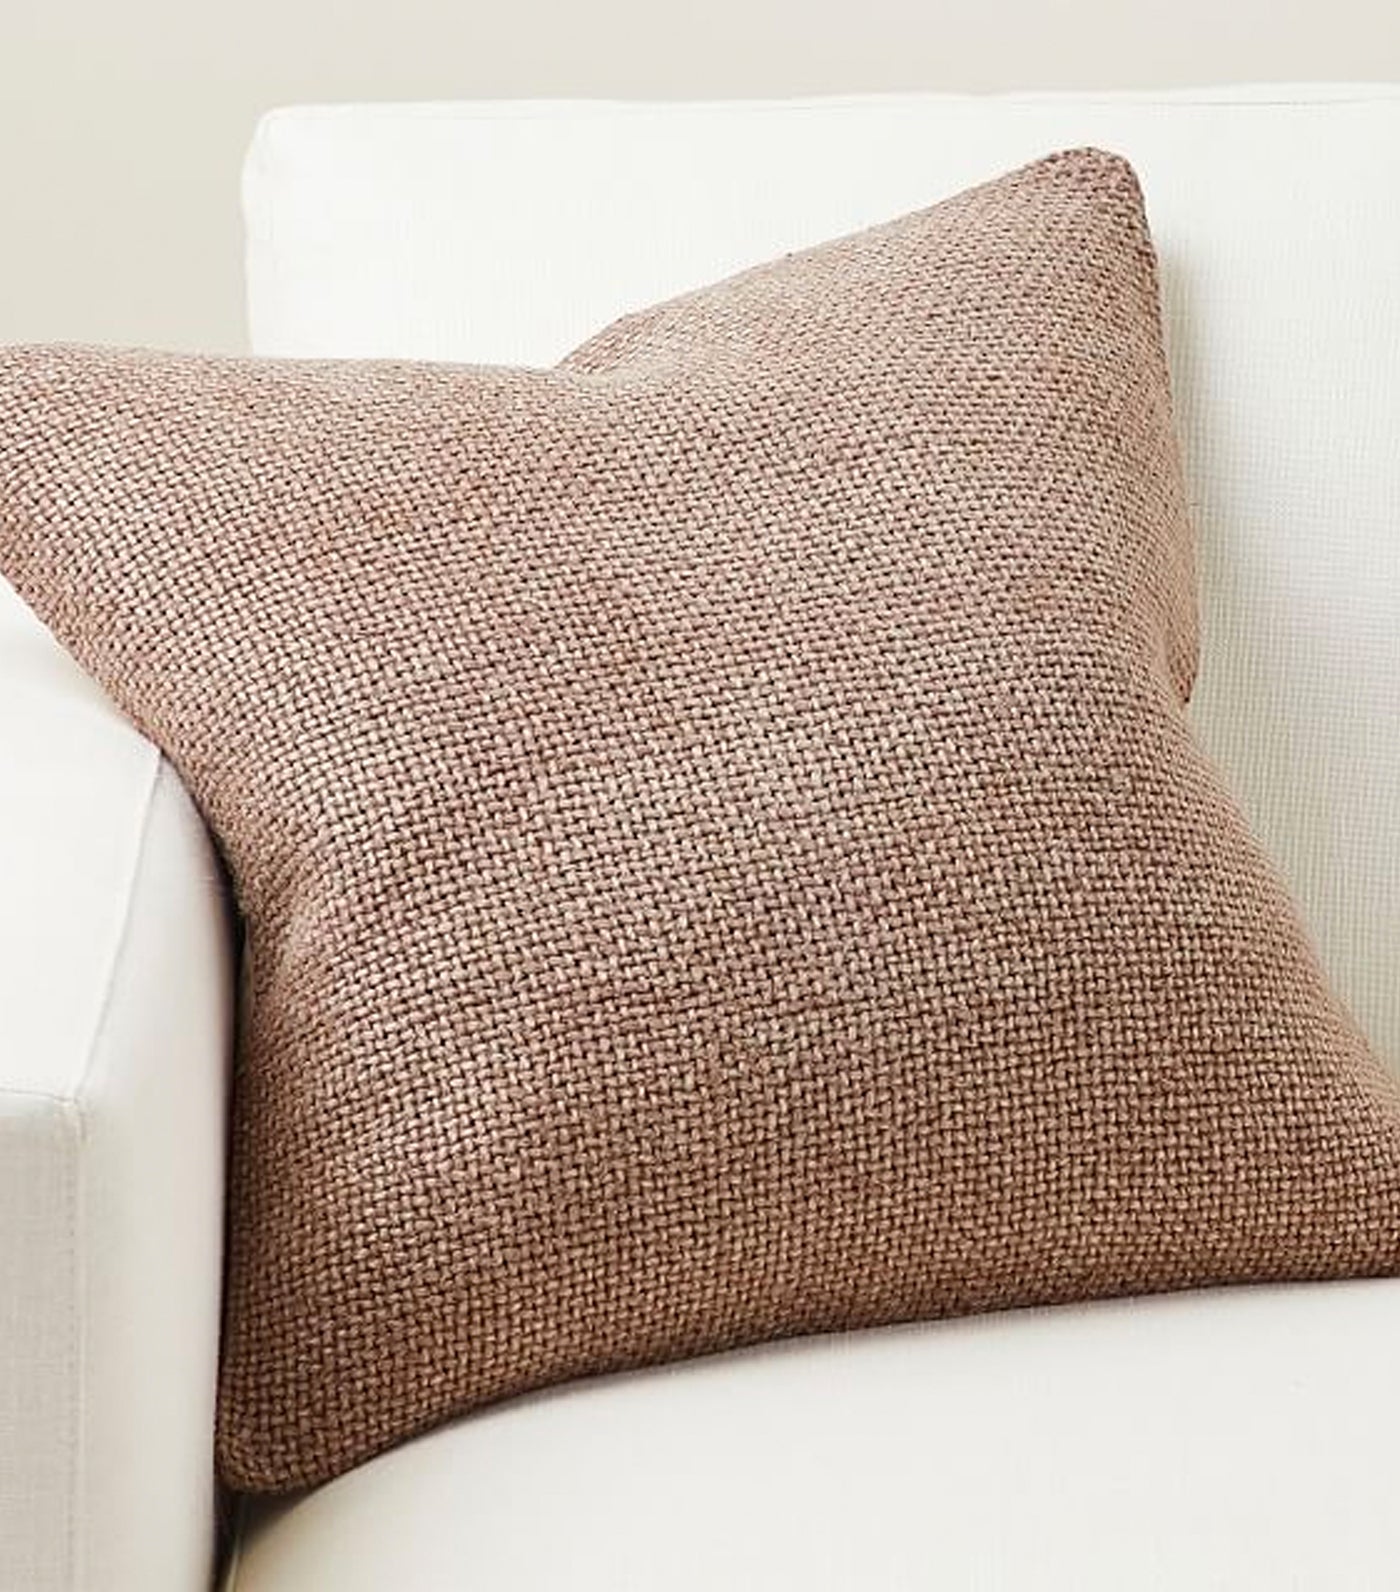 Pottery Barn Faye Linen Textured Pillow Cover